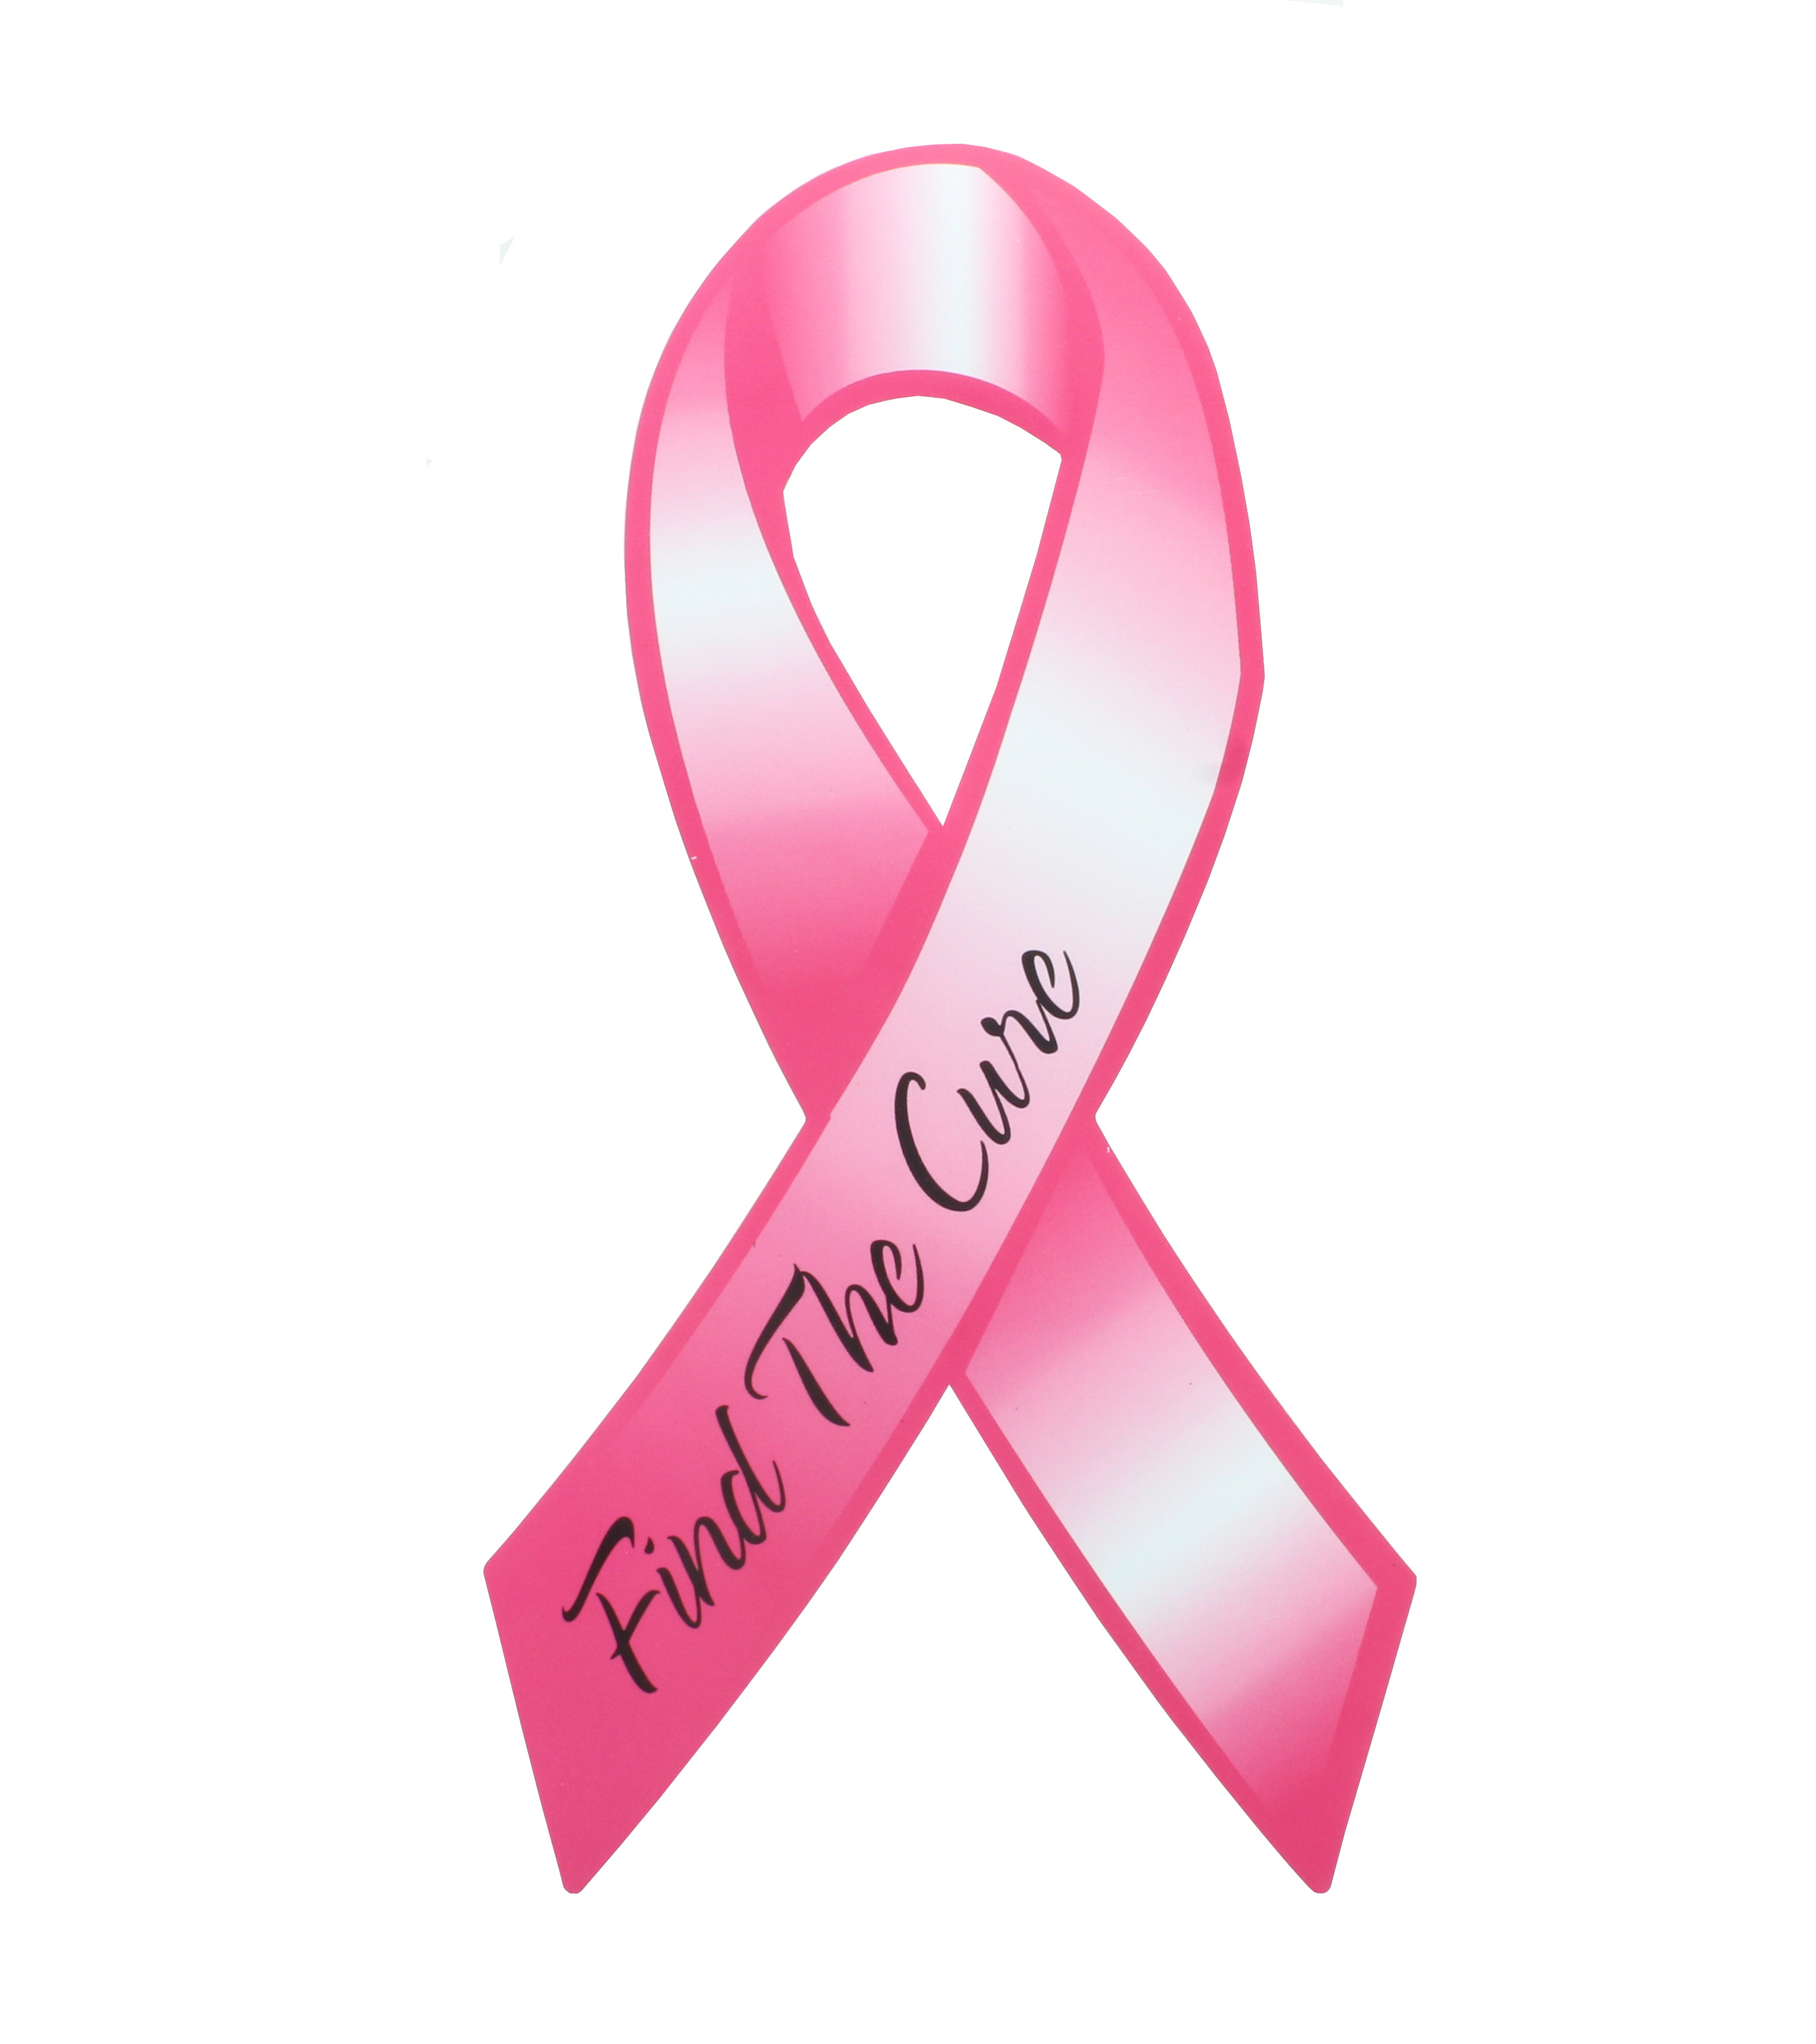 Breast Cancer Awareness Pink Ribbon Car Magnets Lot Of 12 | eBay